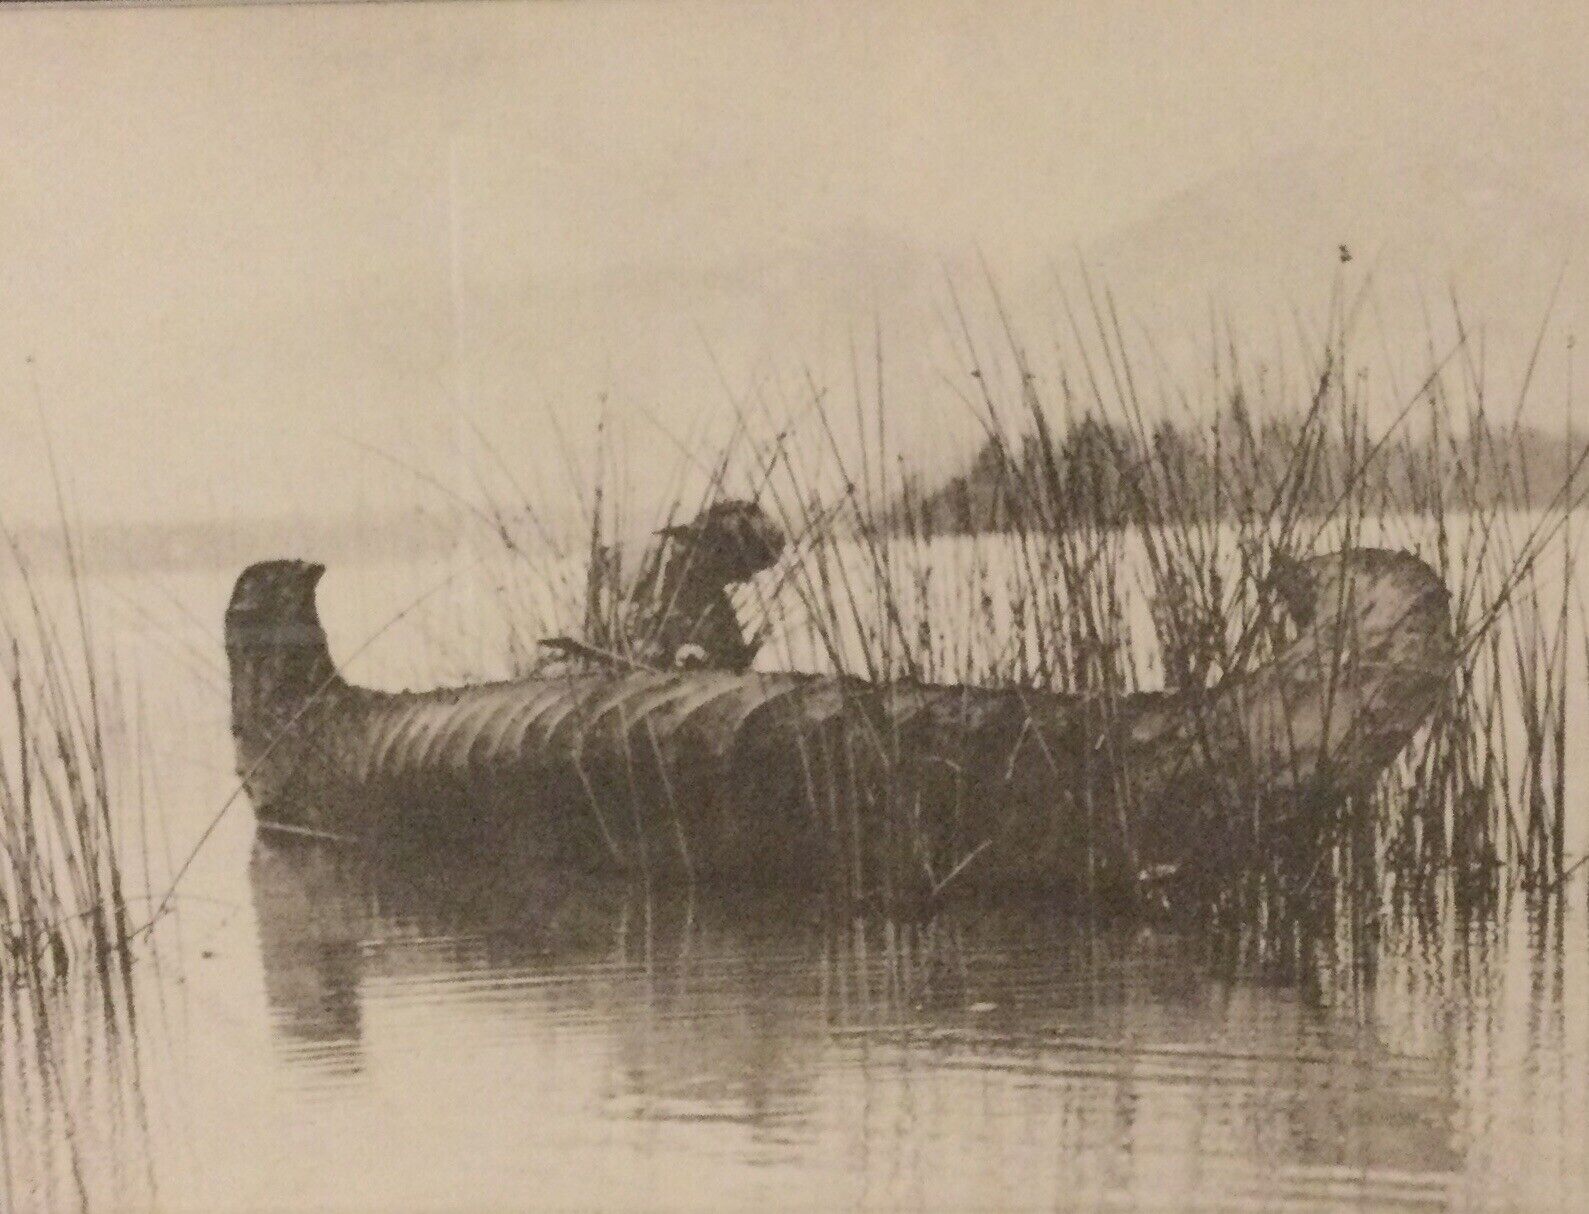 Edward Curtis Reproduction Print "kutenai Duck Hunter” 1910